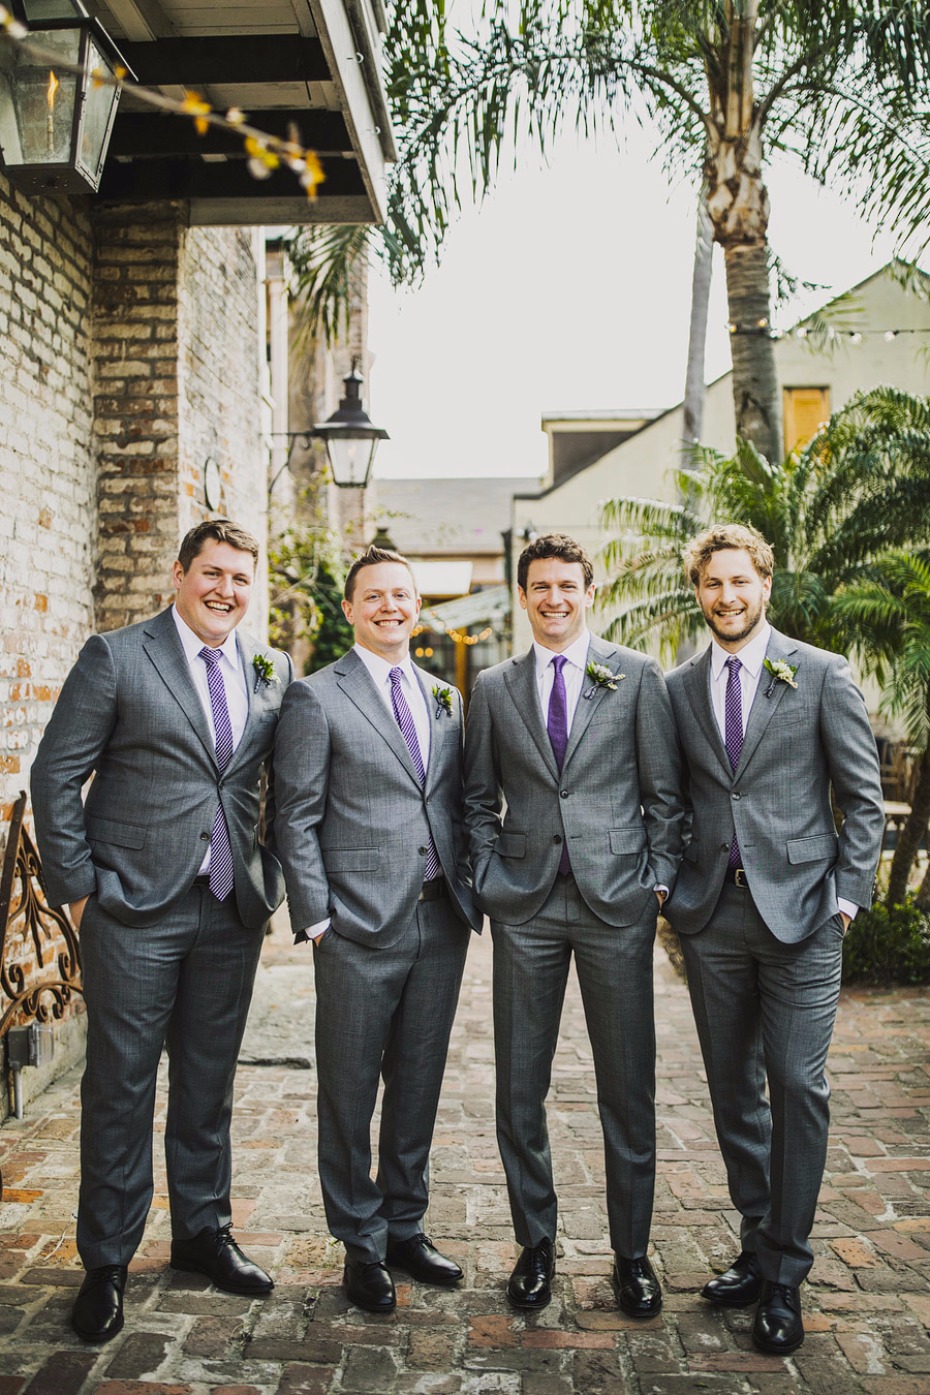 Groomsmen in grey with purple ties